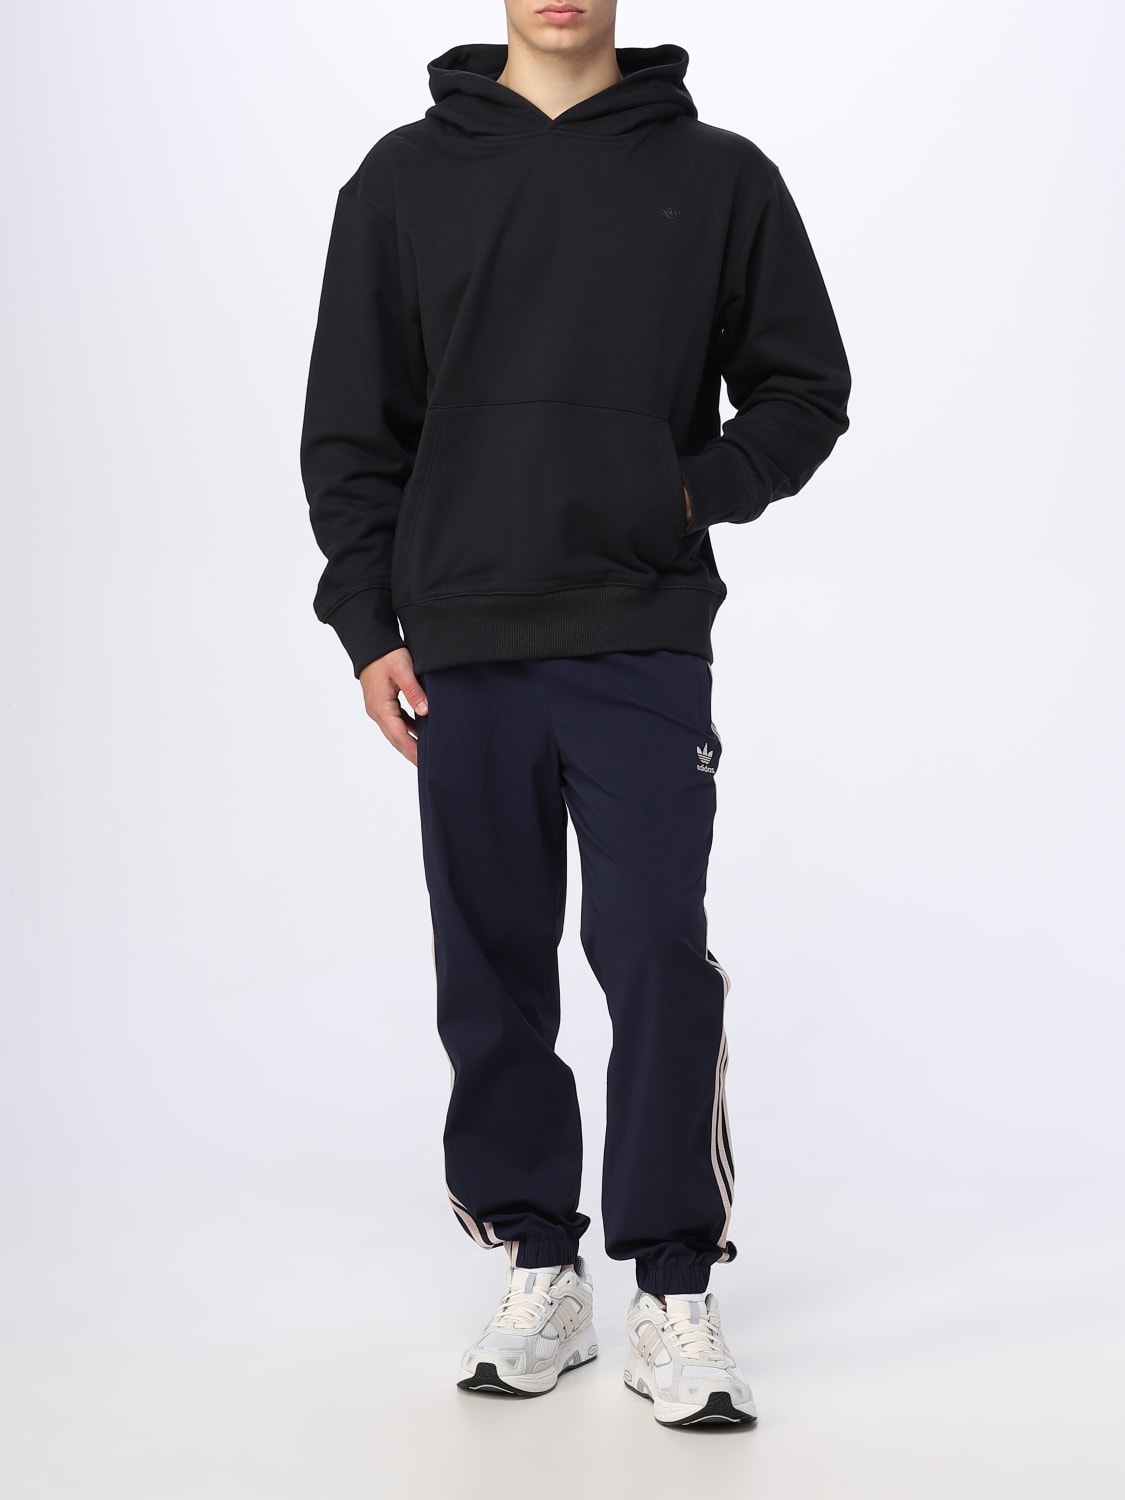 ADIDAS ORIGINALS: sweatshirt in cotton - Black | Adidas Originals sweatshirt  HK2937 online at